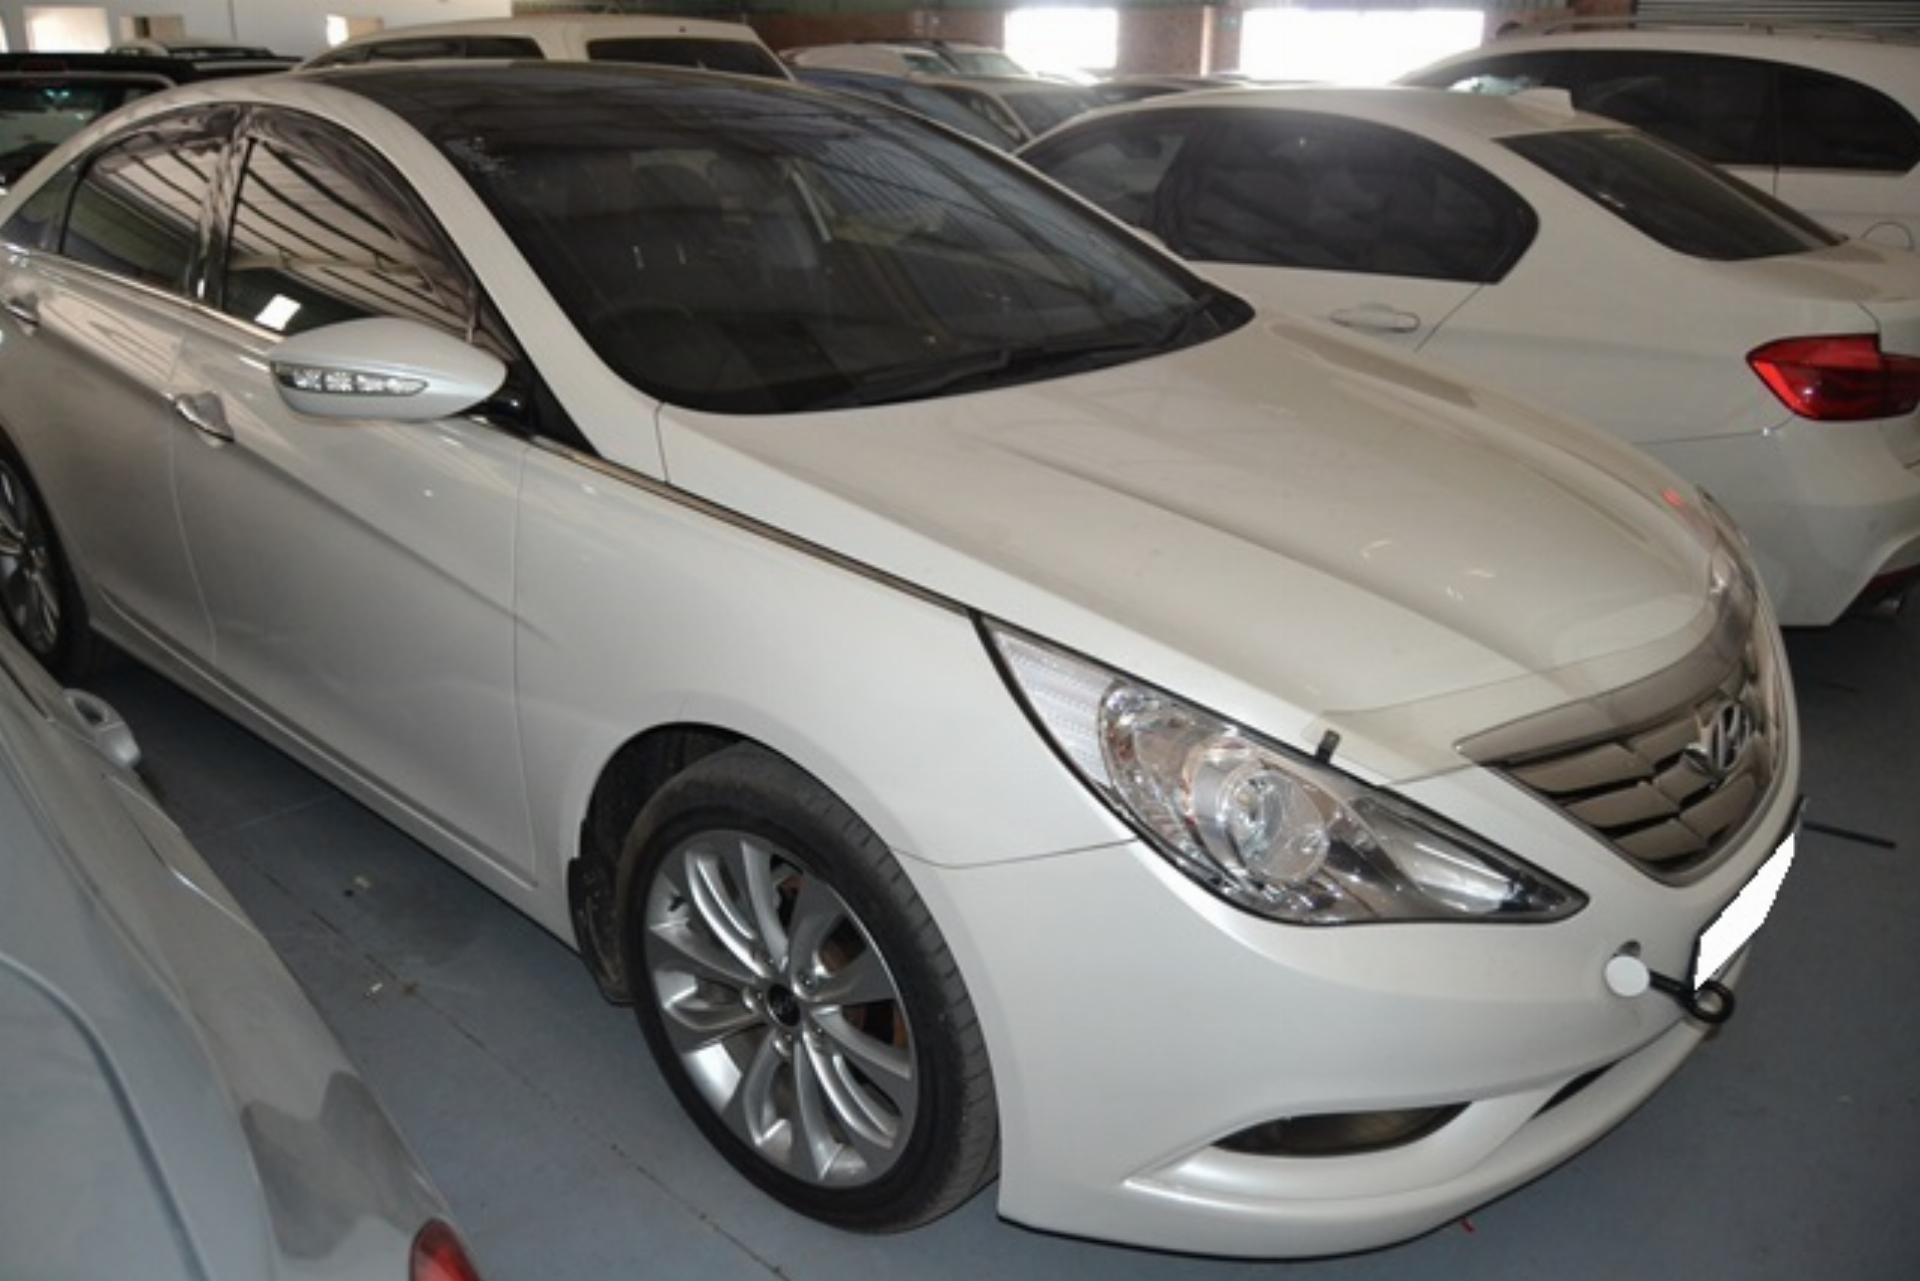 Repossessed Hyundai Sonata 2.4 2012 on auction MC44203